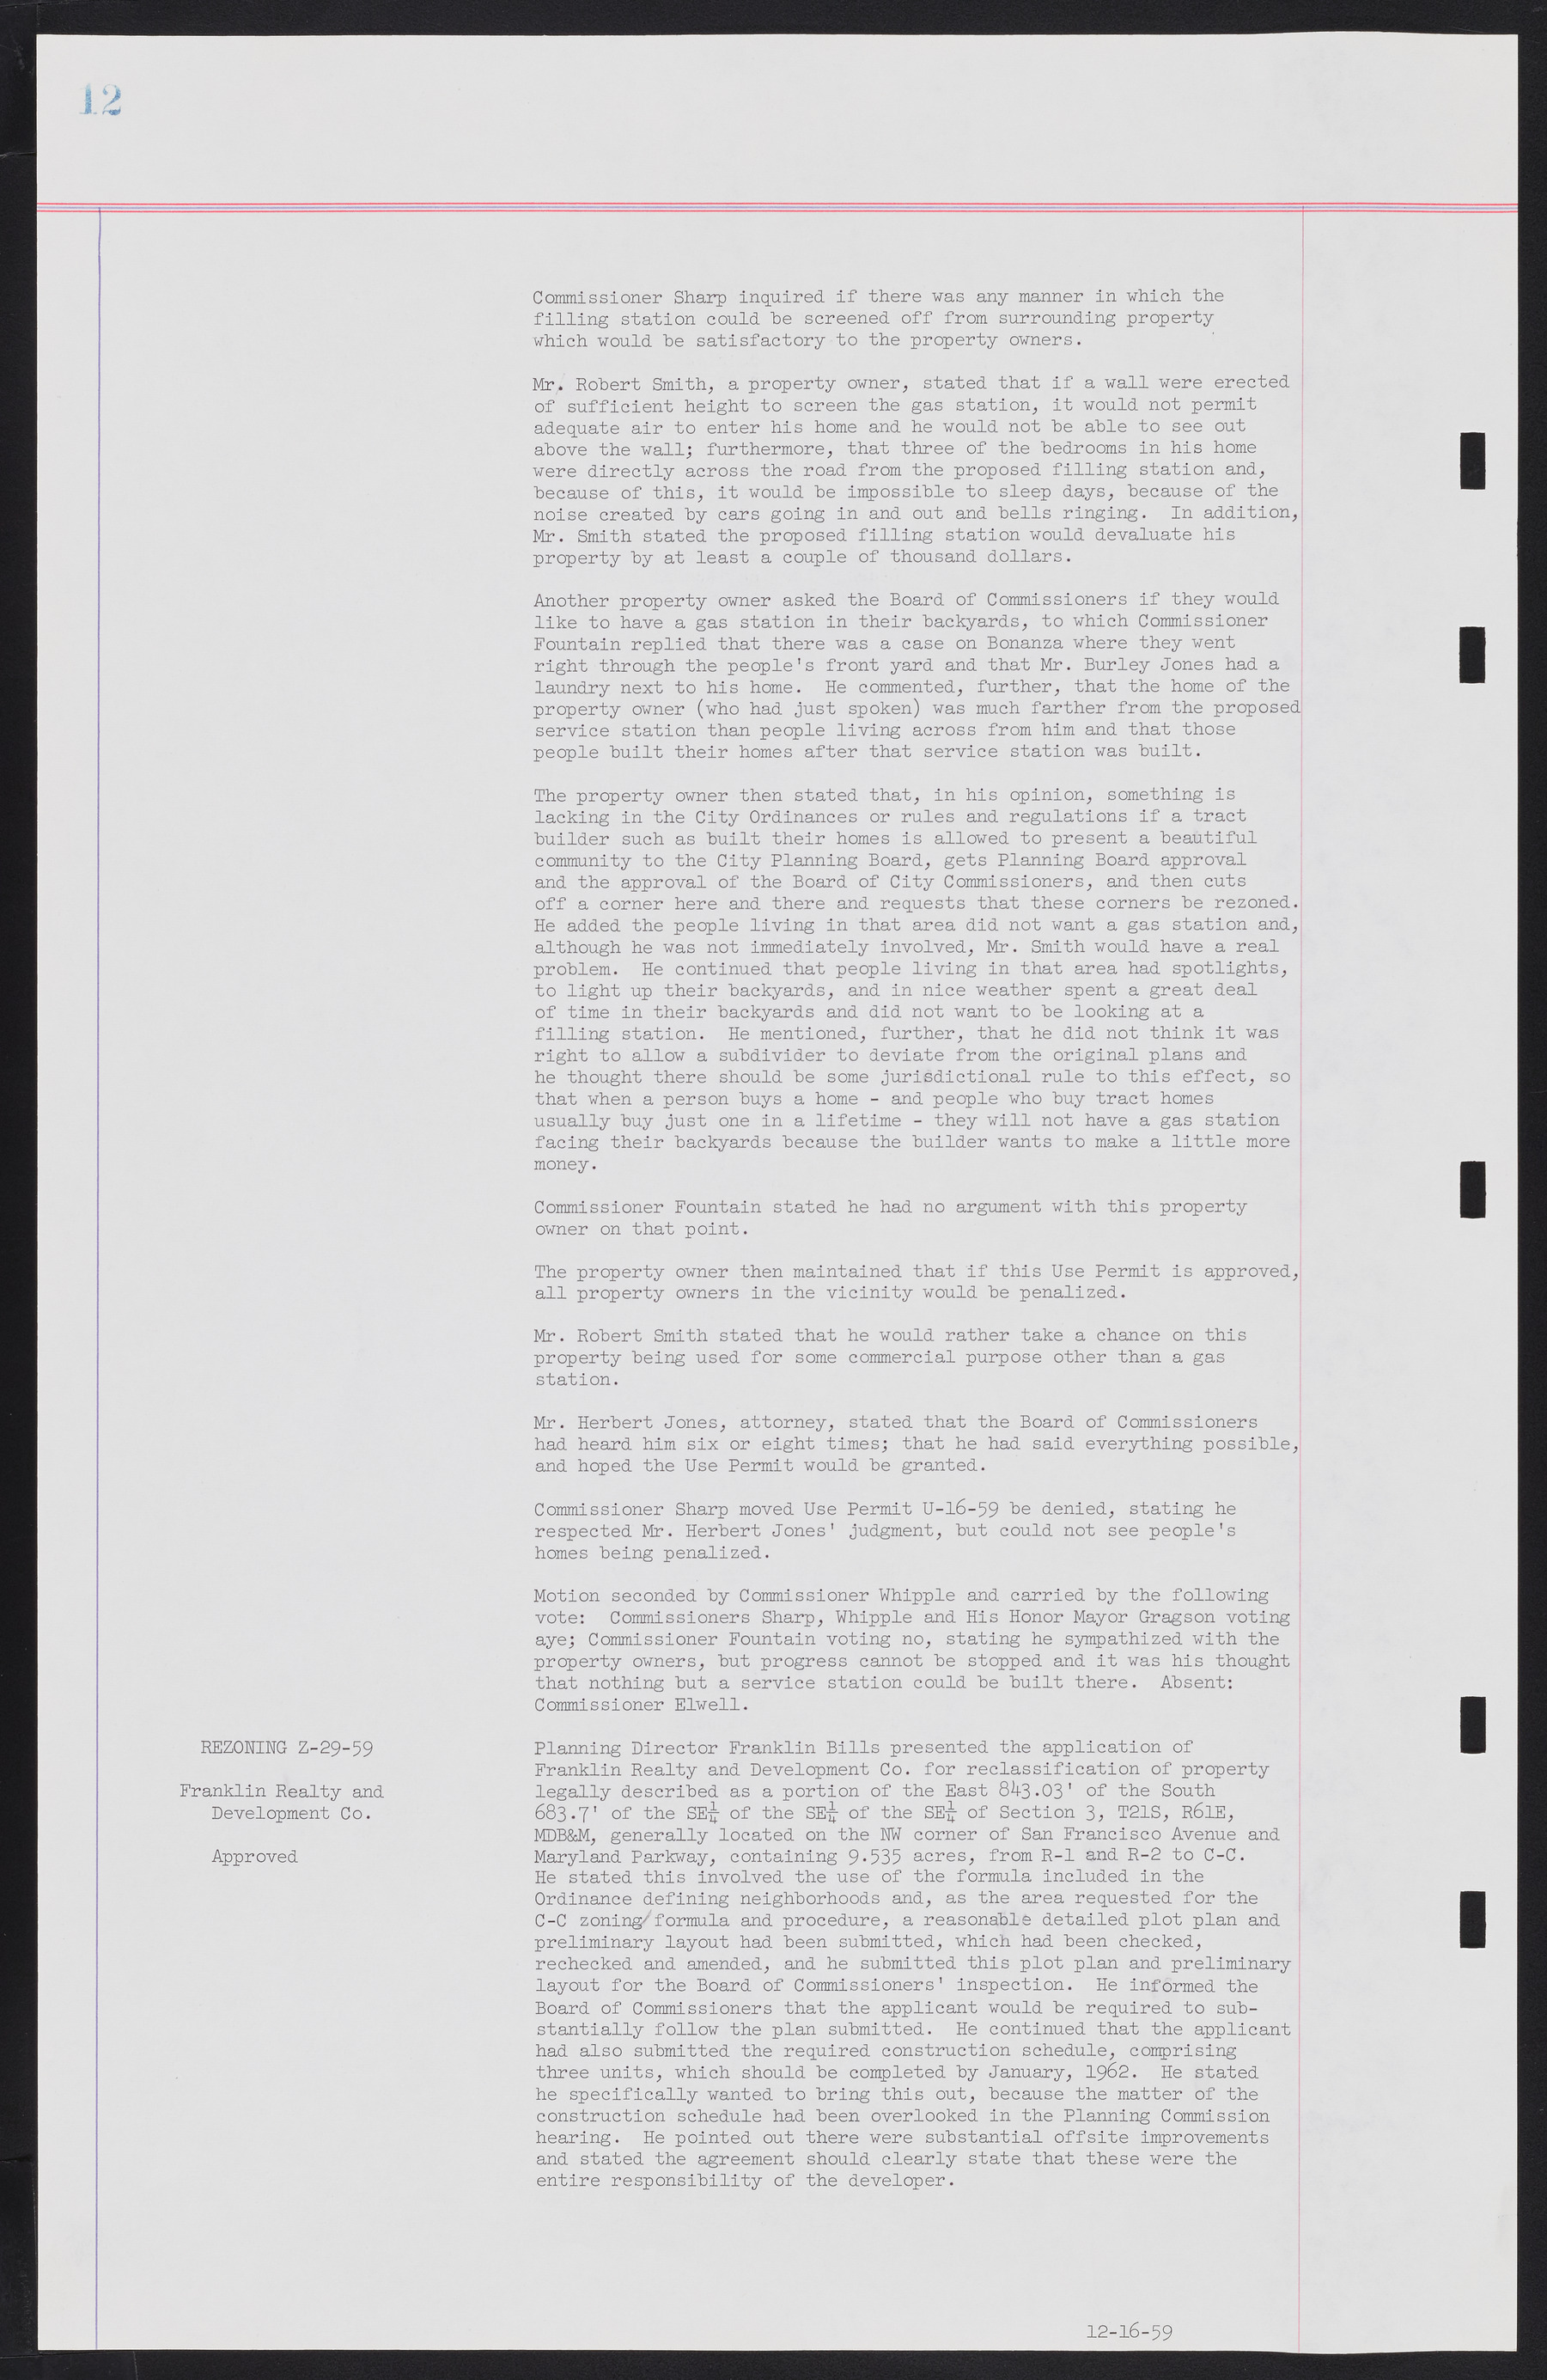 Las Vegas City Commission Minutes, December 8, 1959 to February 17, 1960, lvc000012-16